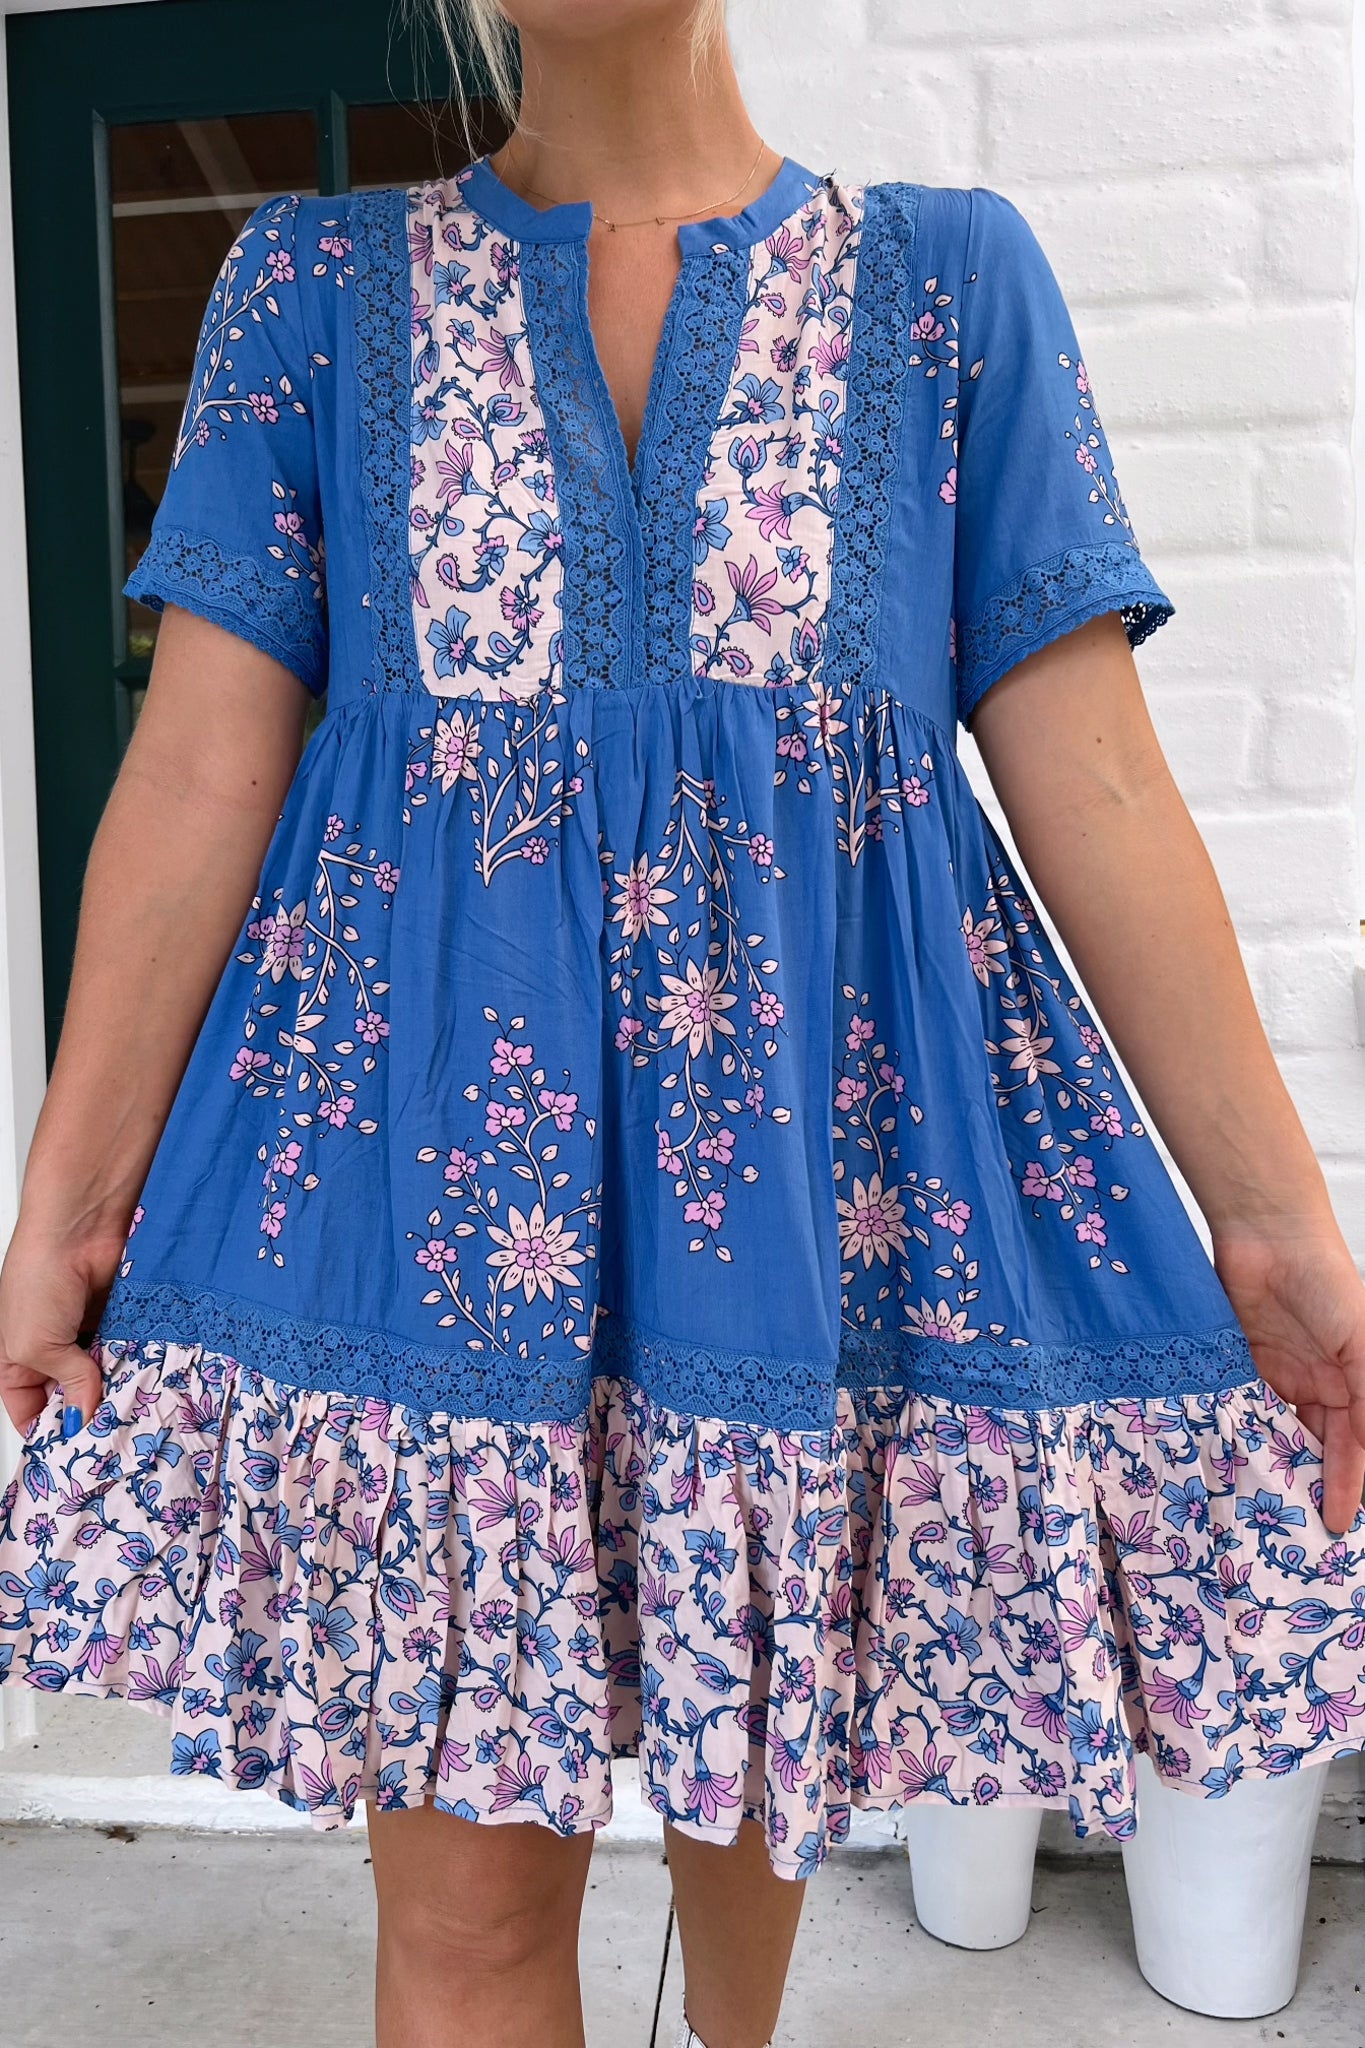 JAASE - Summer Romantics Mini Dress: Lace Detail Short Sleeve Smock Dress in Hailee Print